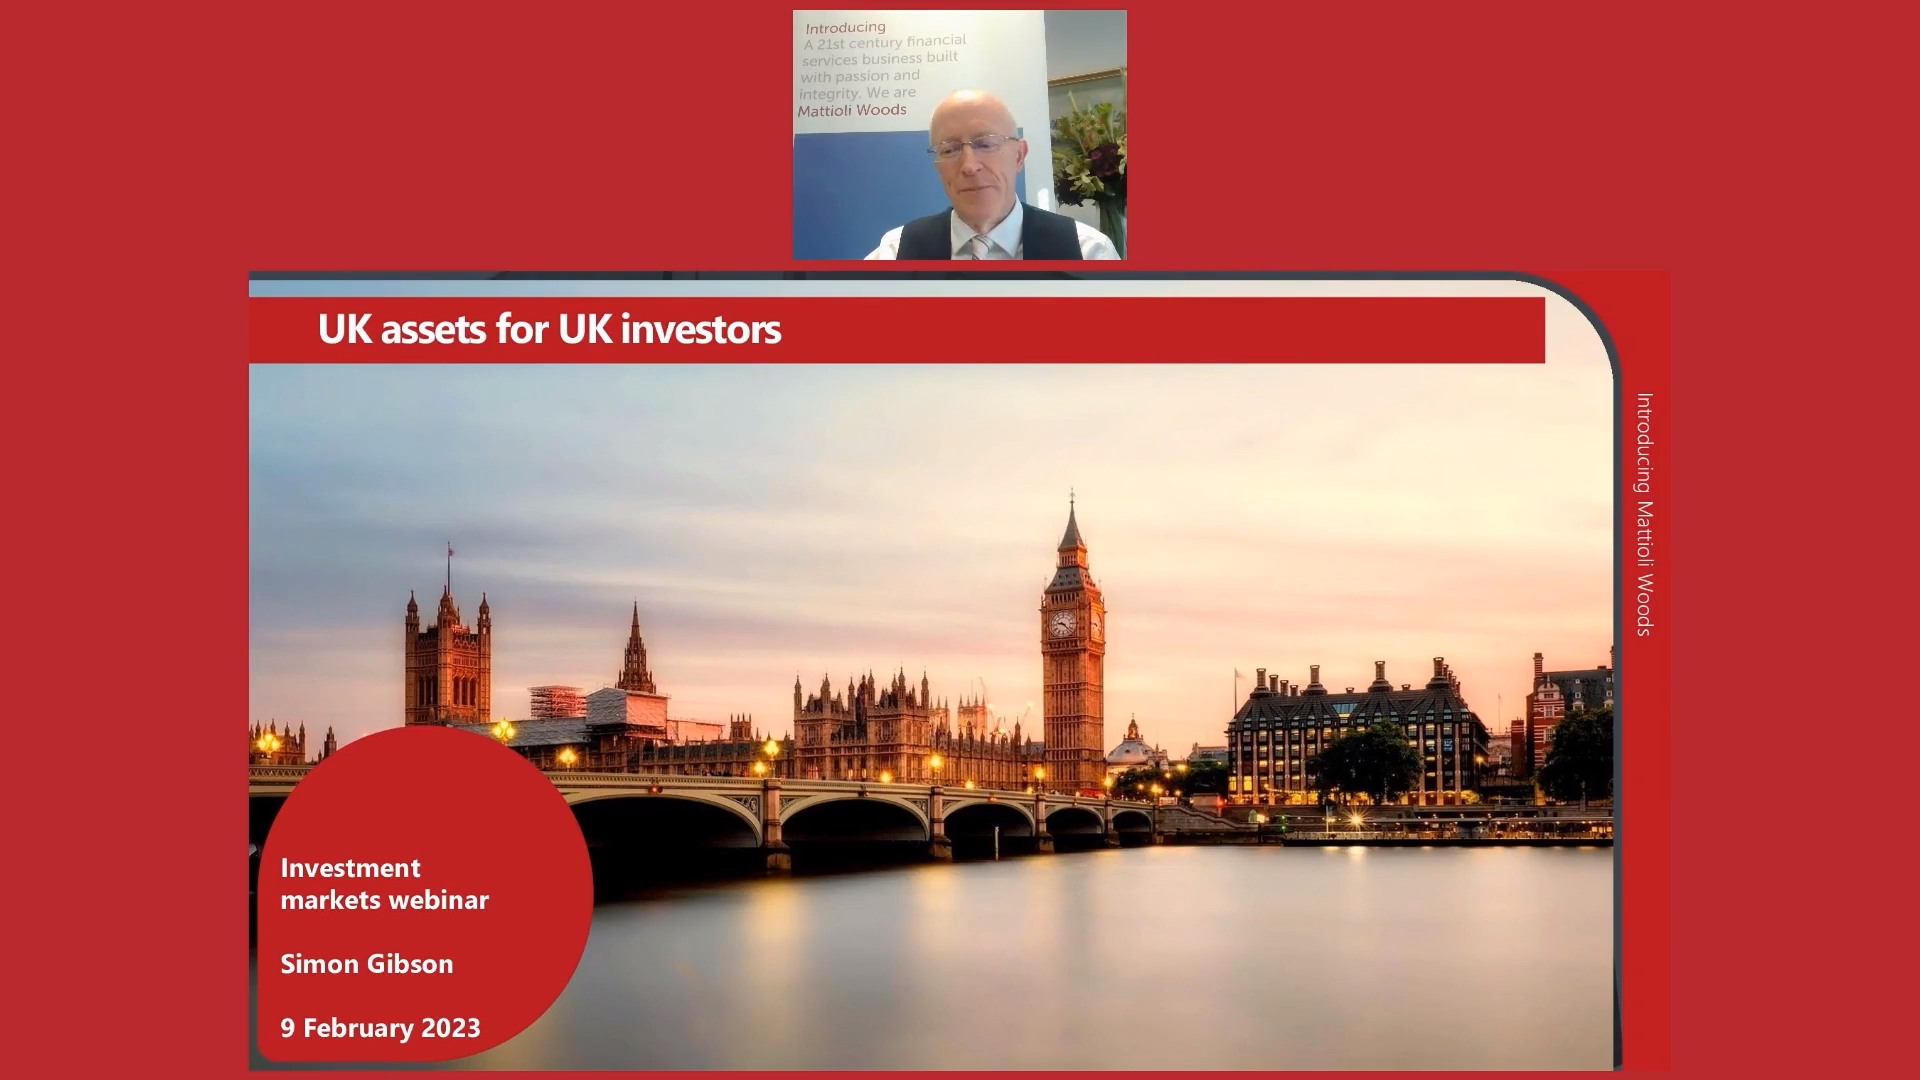 Investment markets webinar - 9 February 2023